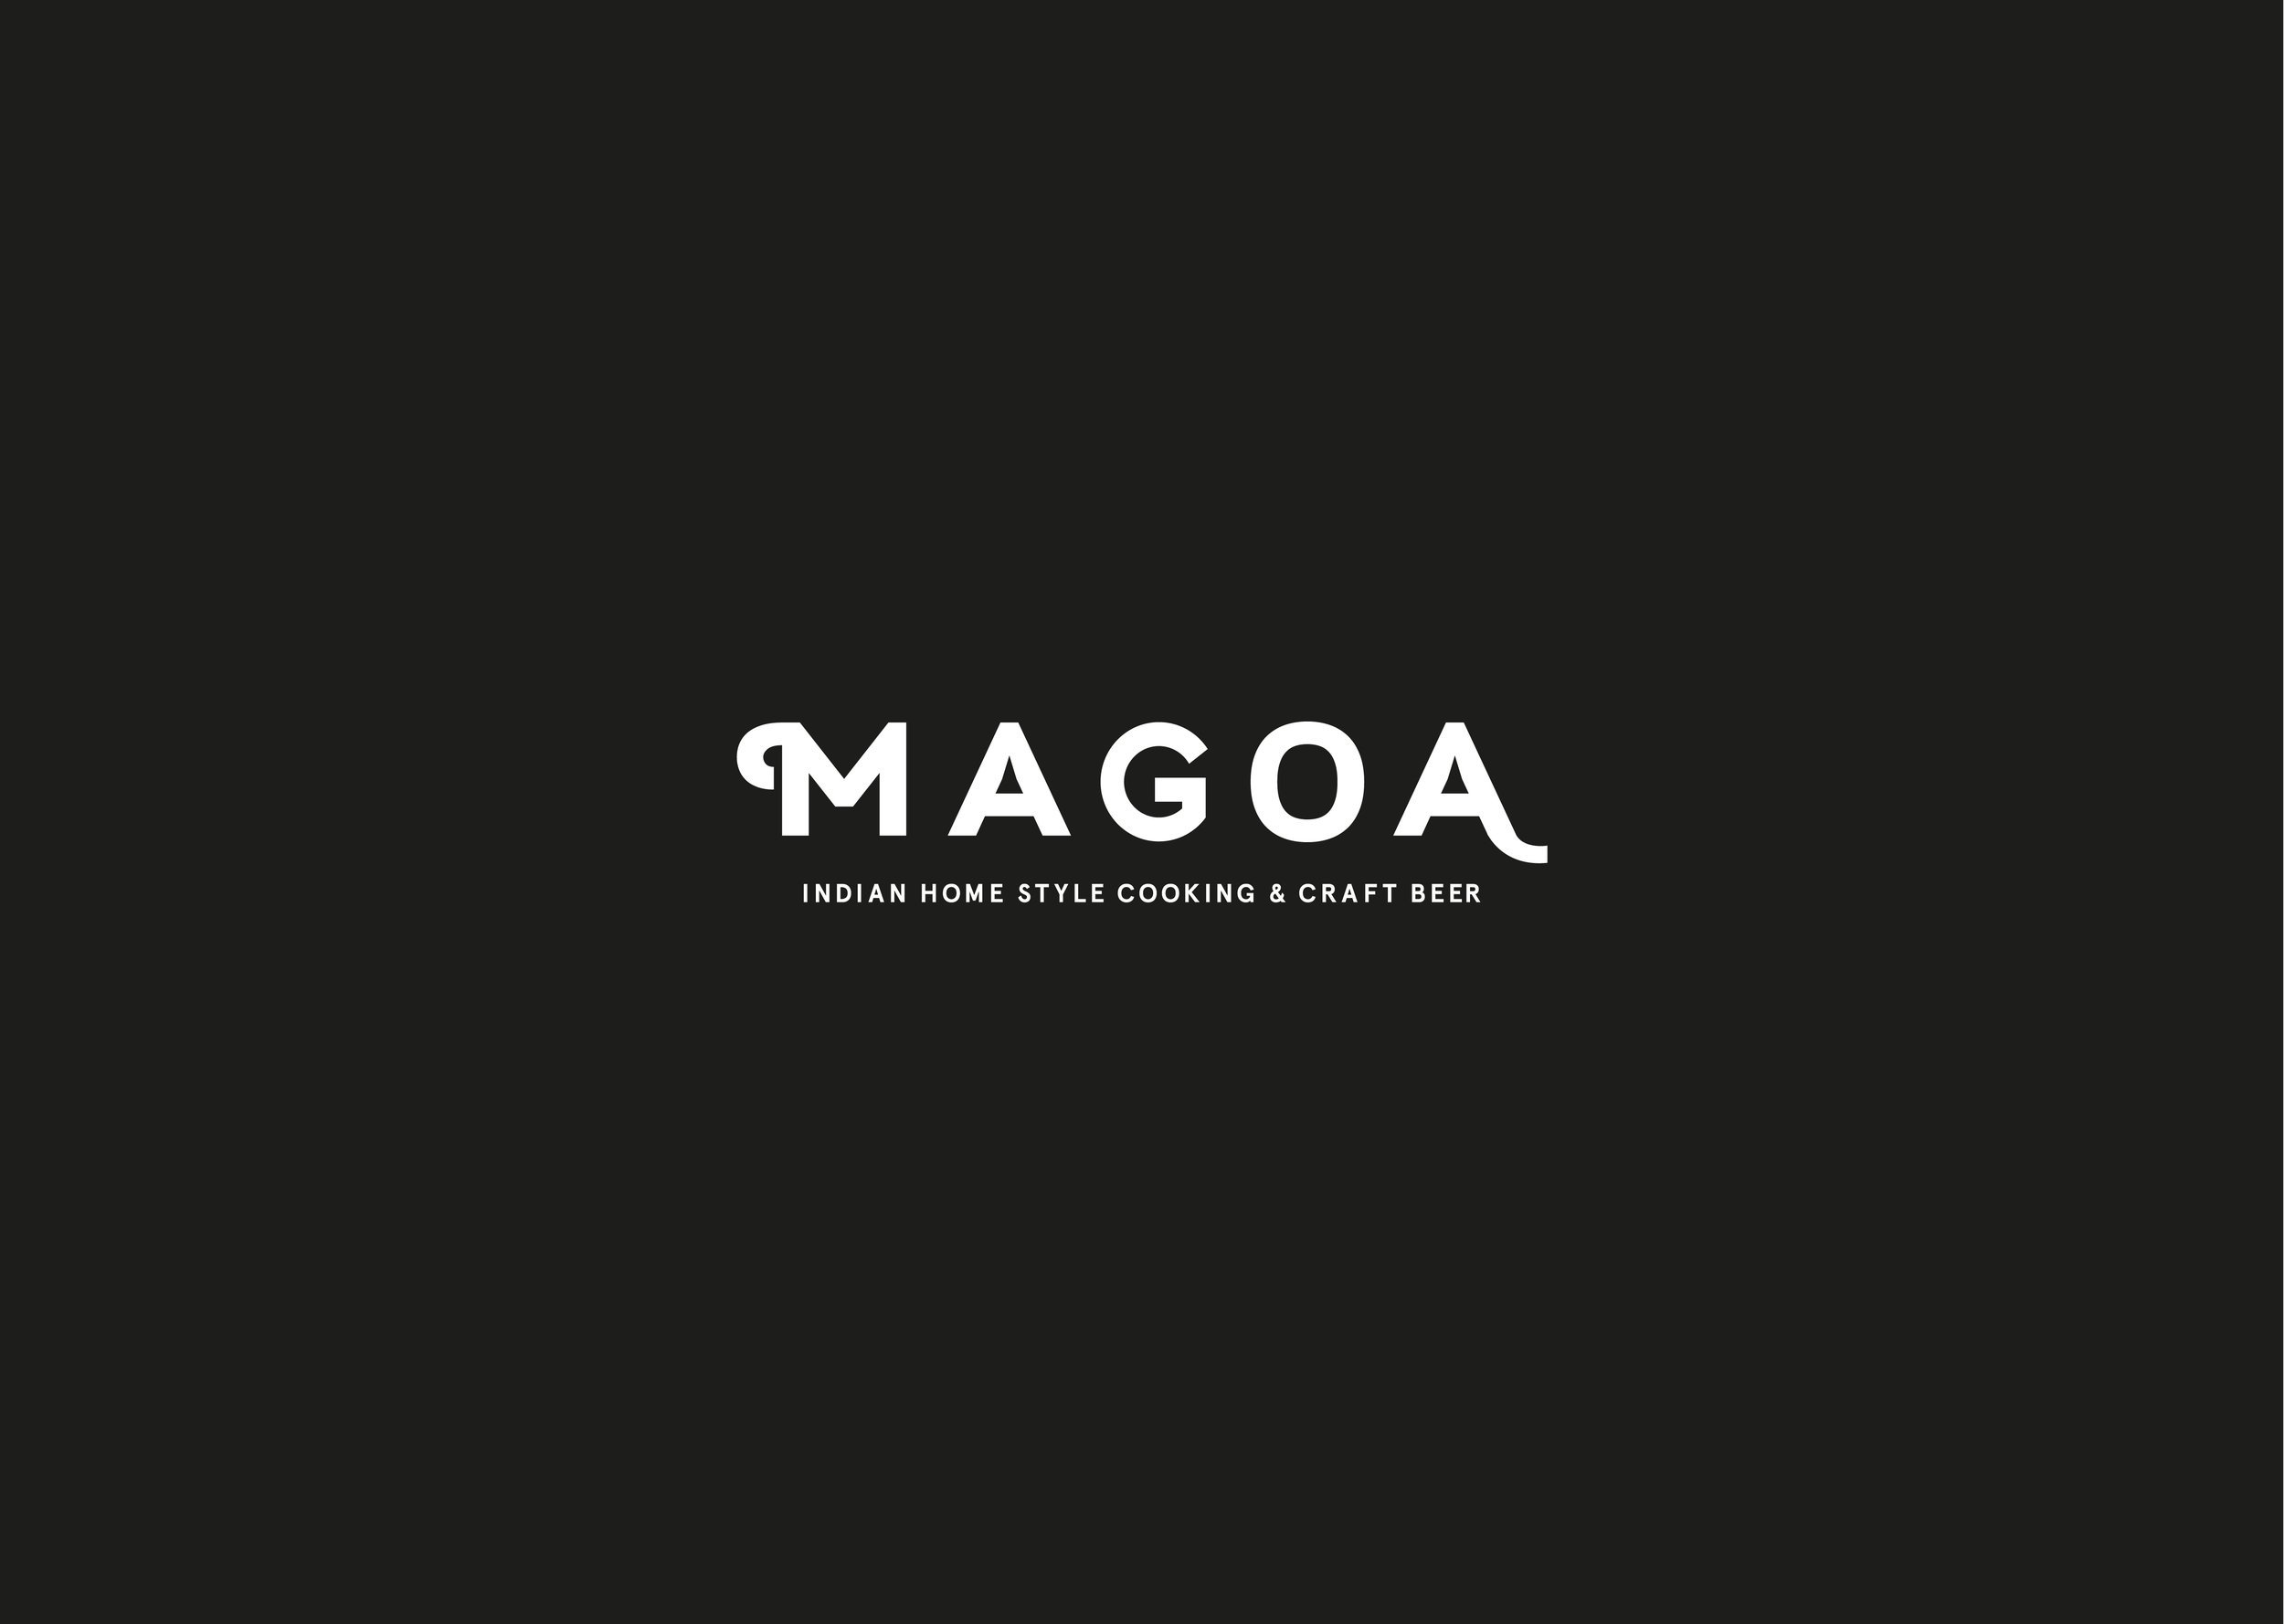 Graphic Designer London. Magoa company font logo in black background